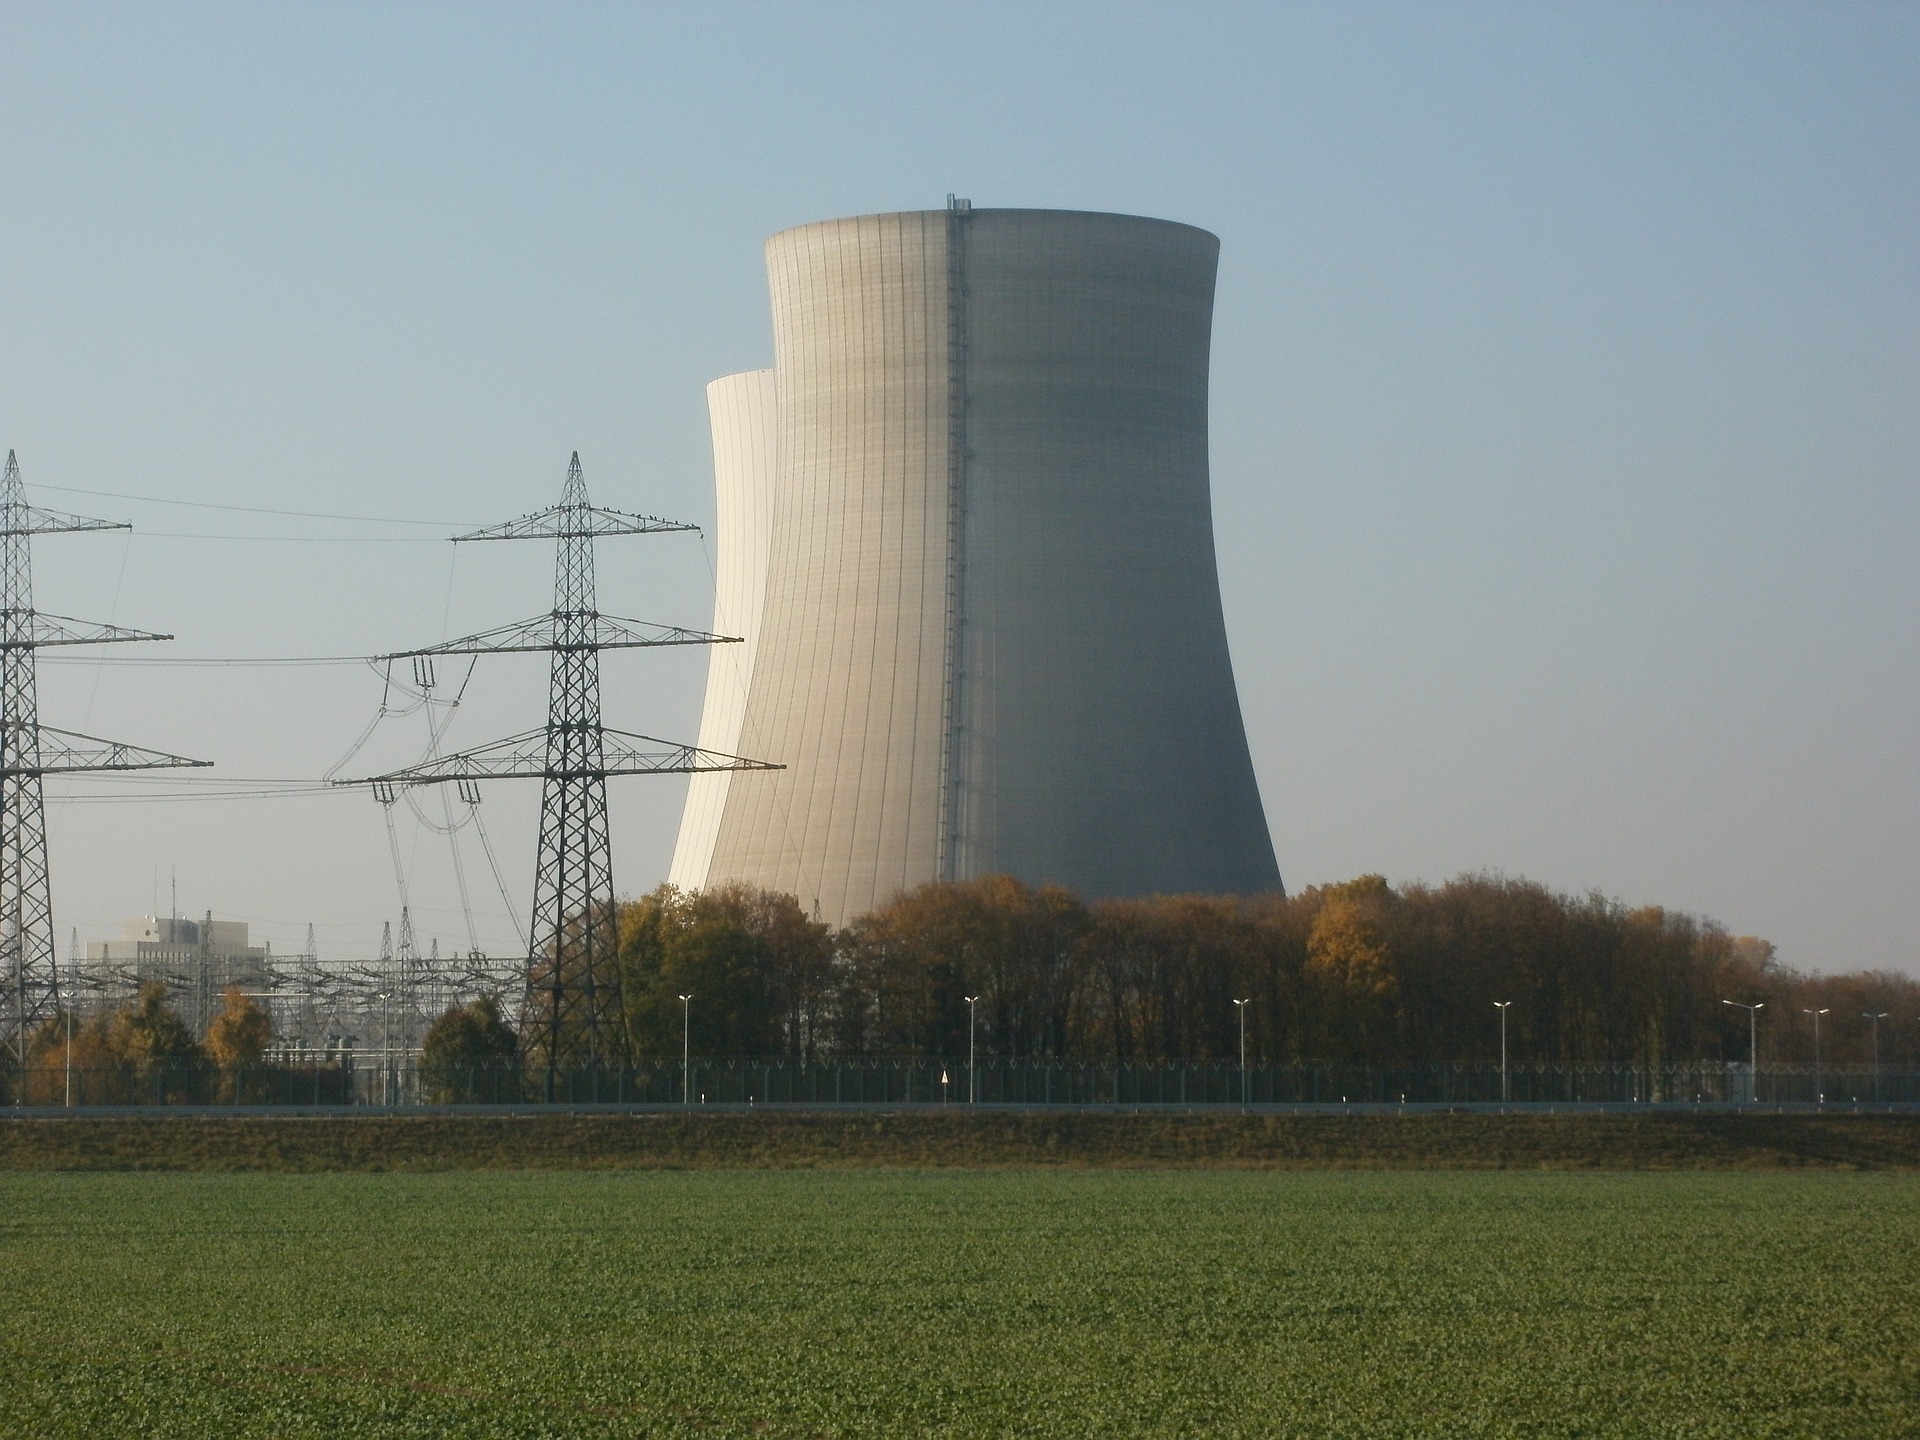 nuclear-power-plant-837824_1920